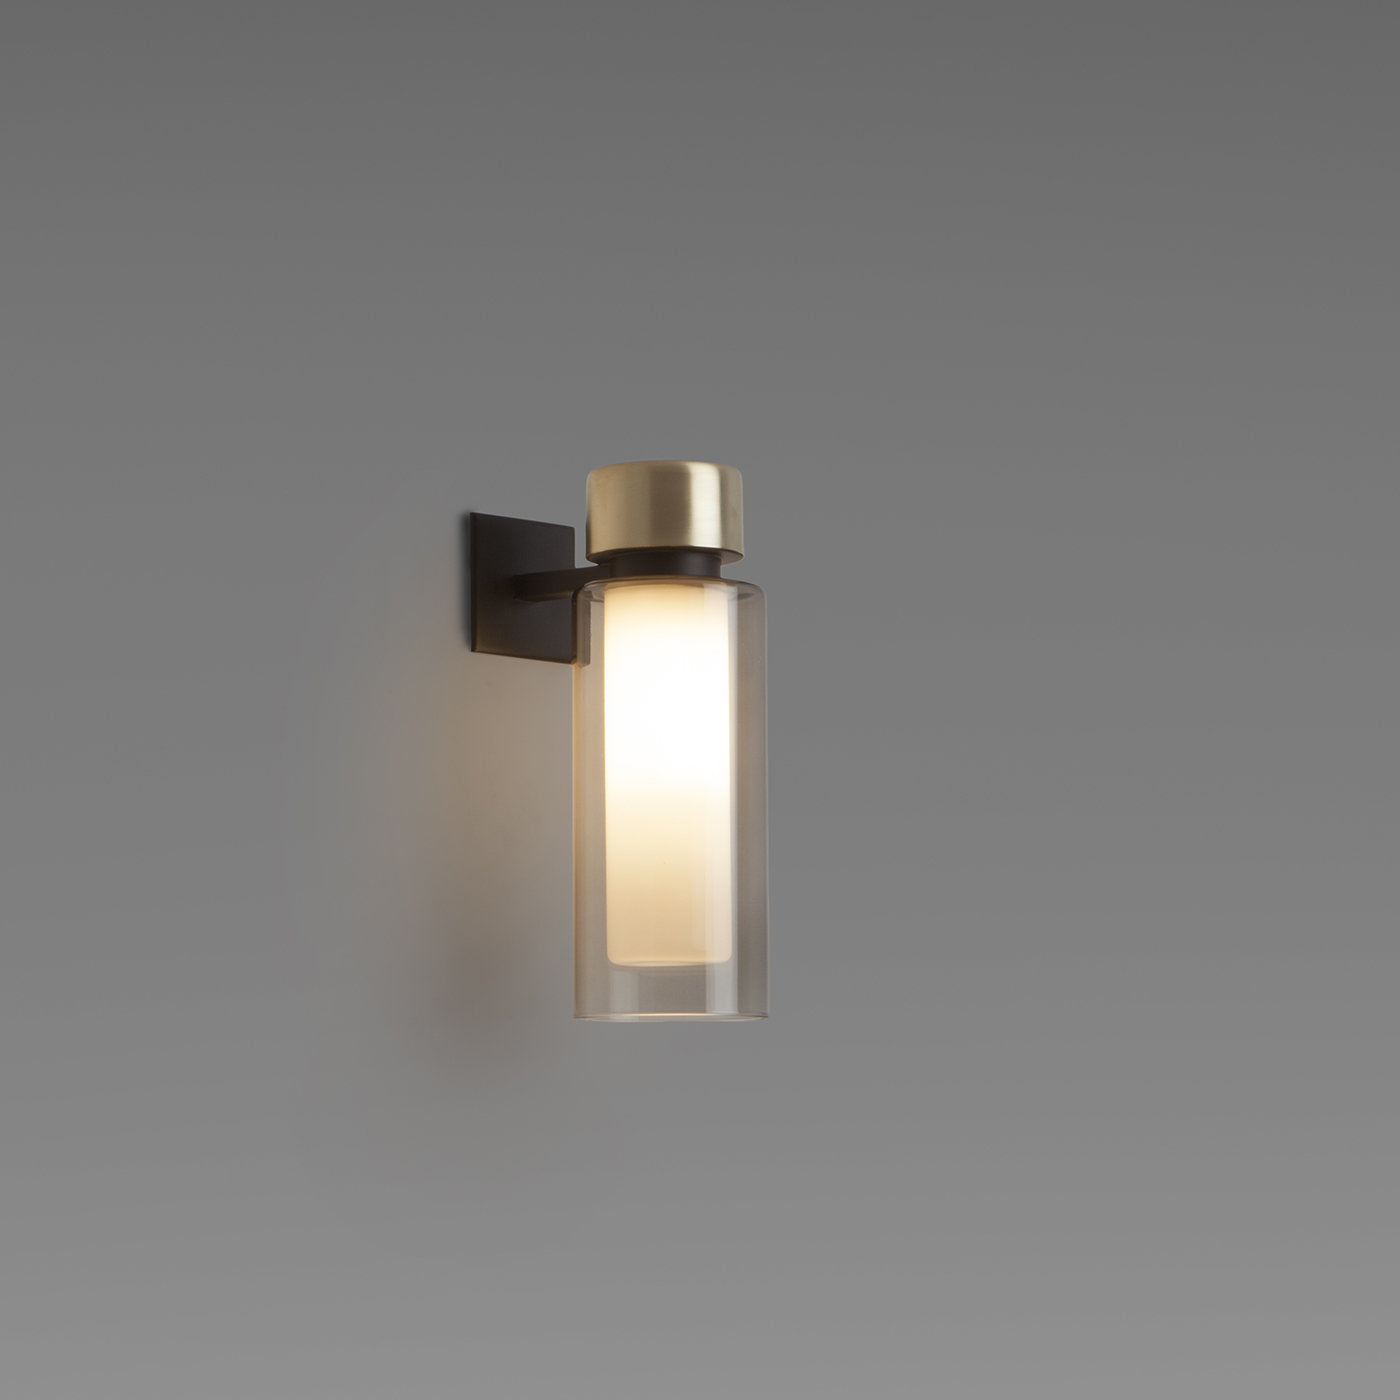 Osman Single Wall Lamp by Corrado Dotti - Alternative view 1